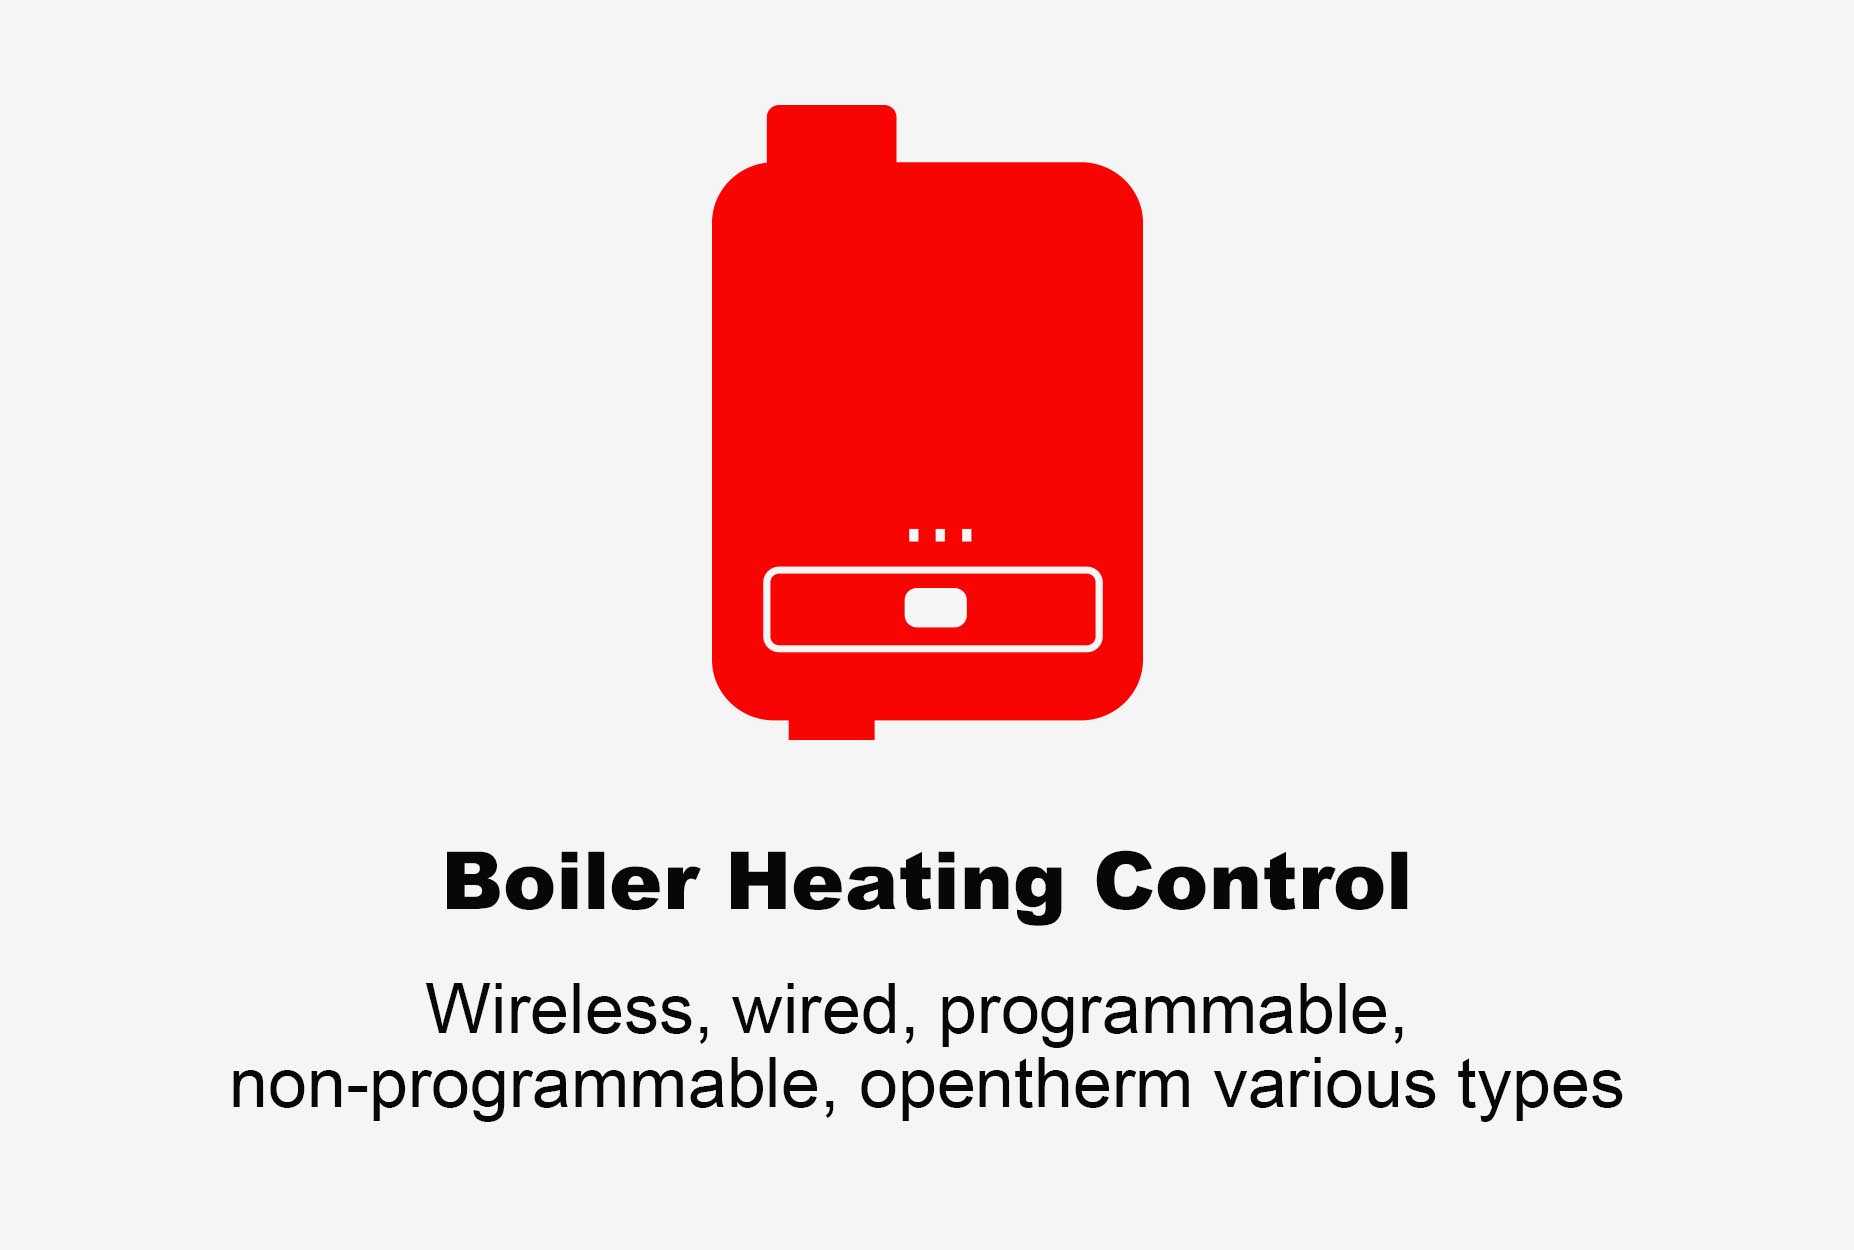 kabelgebundener Thermostat, kabelloser Thermostat, WLAN-Kesselthermostat, programmierbarer Thermostat, Batteriestromversorgungsthermostat, Opentherm-Thermostat